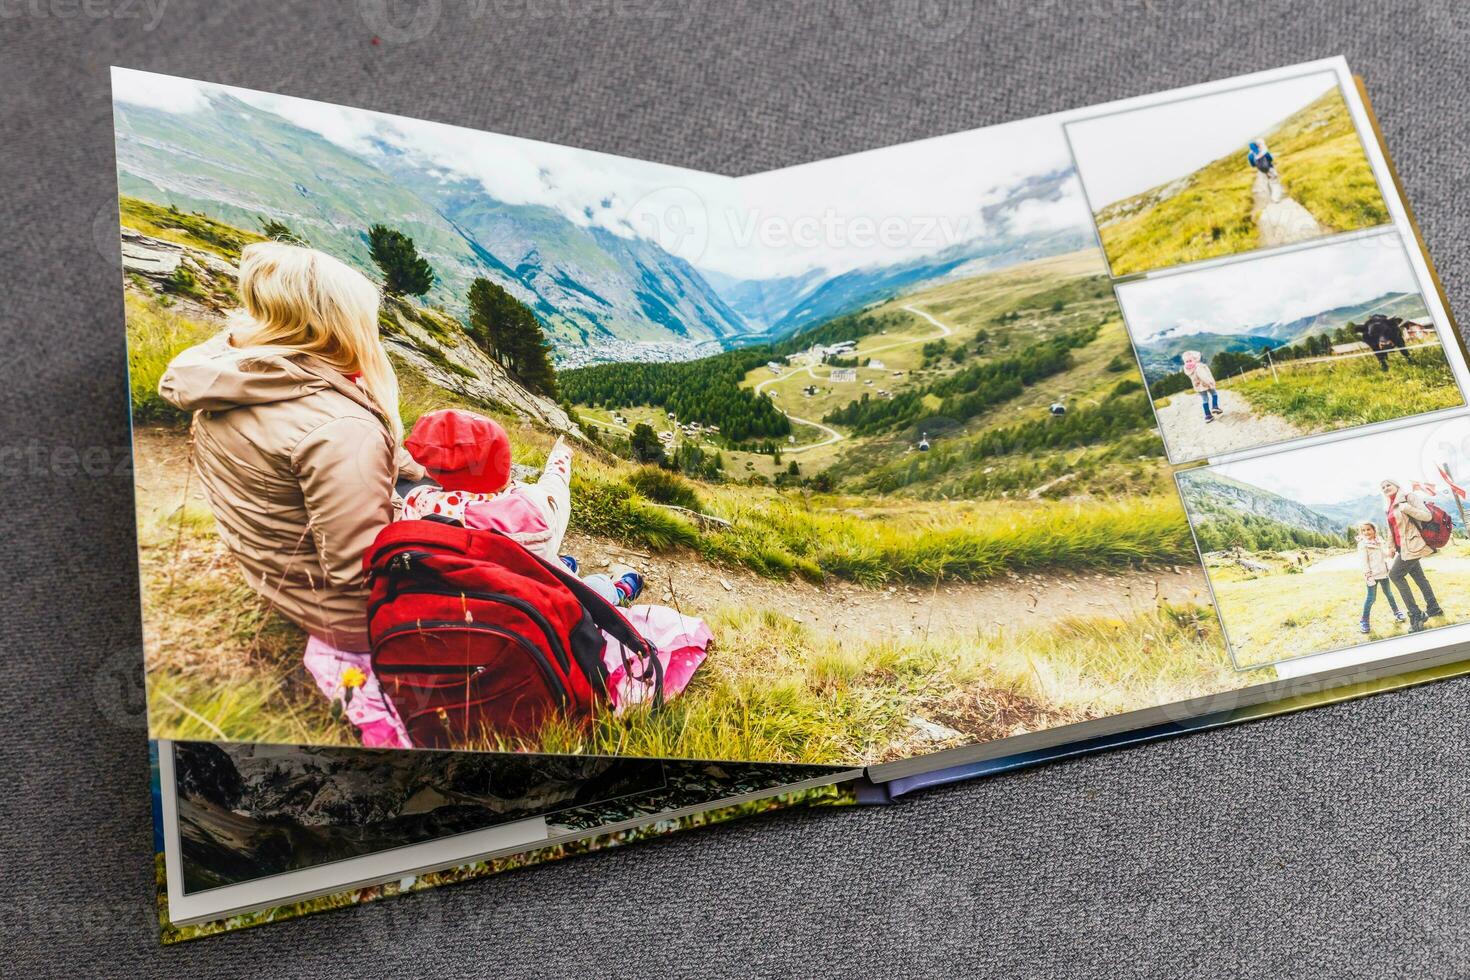 the photobook opened, travel in switzerland, on gray background photo